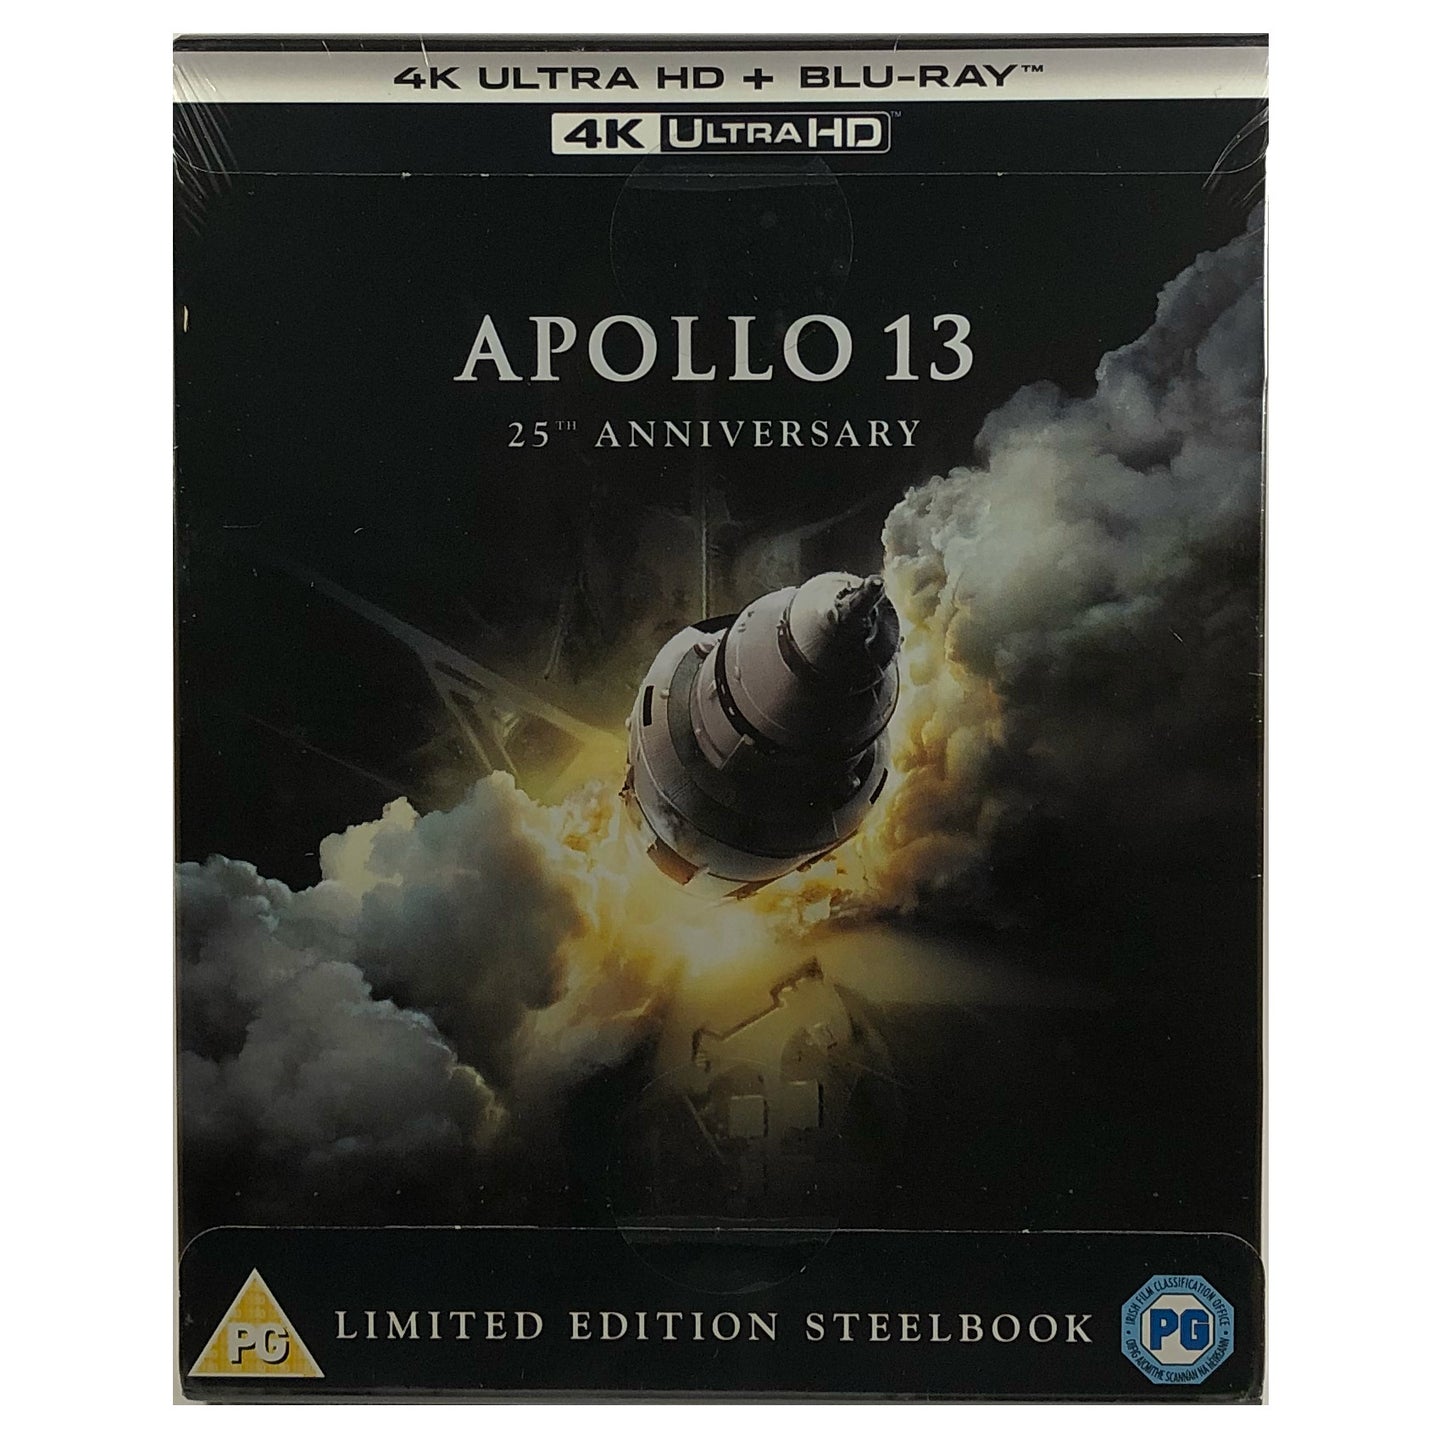 Apollo 13 4K Steelbook